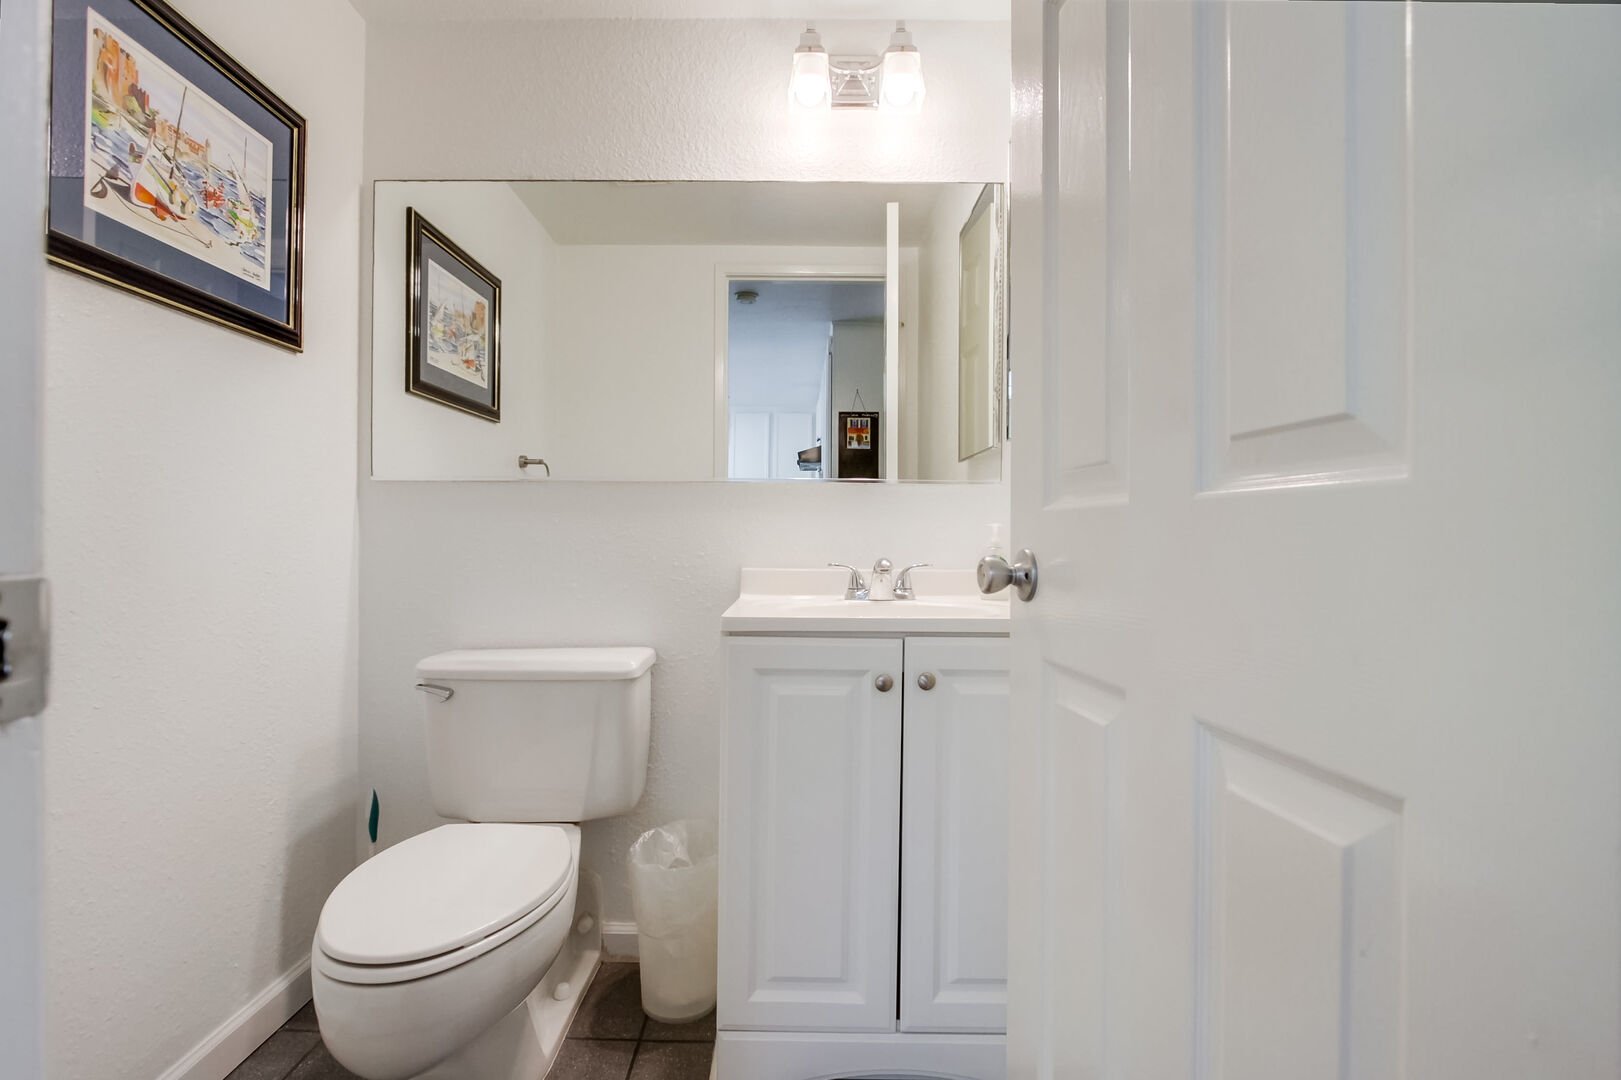 Separate lower level half bathroom (no tub or shower)